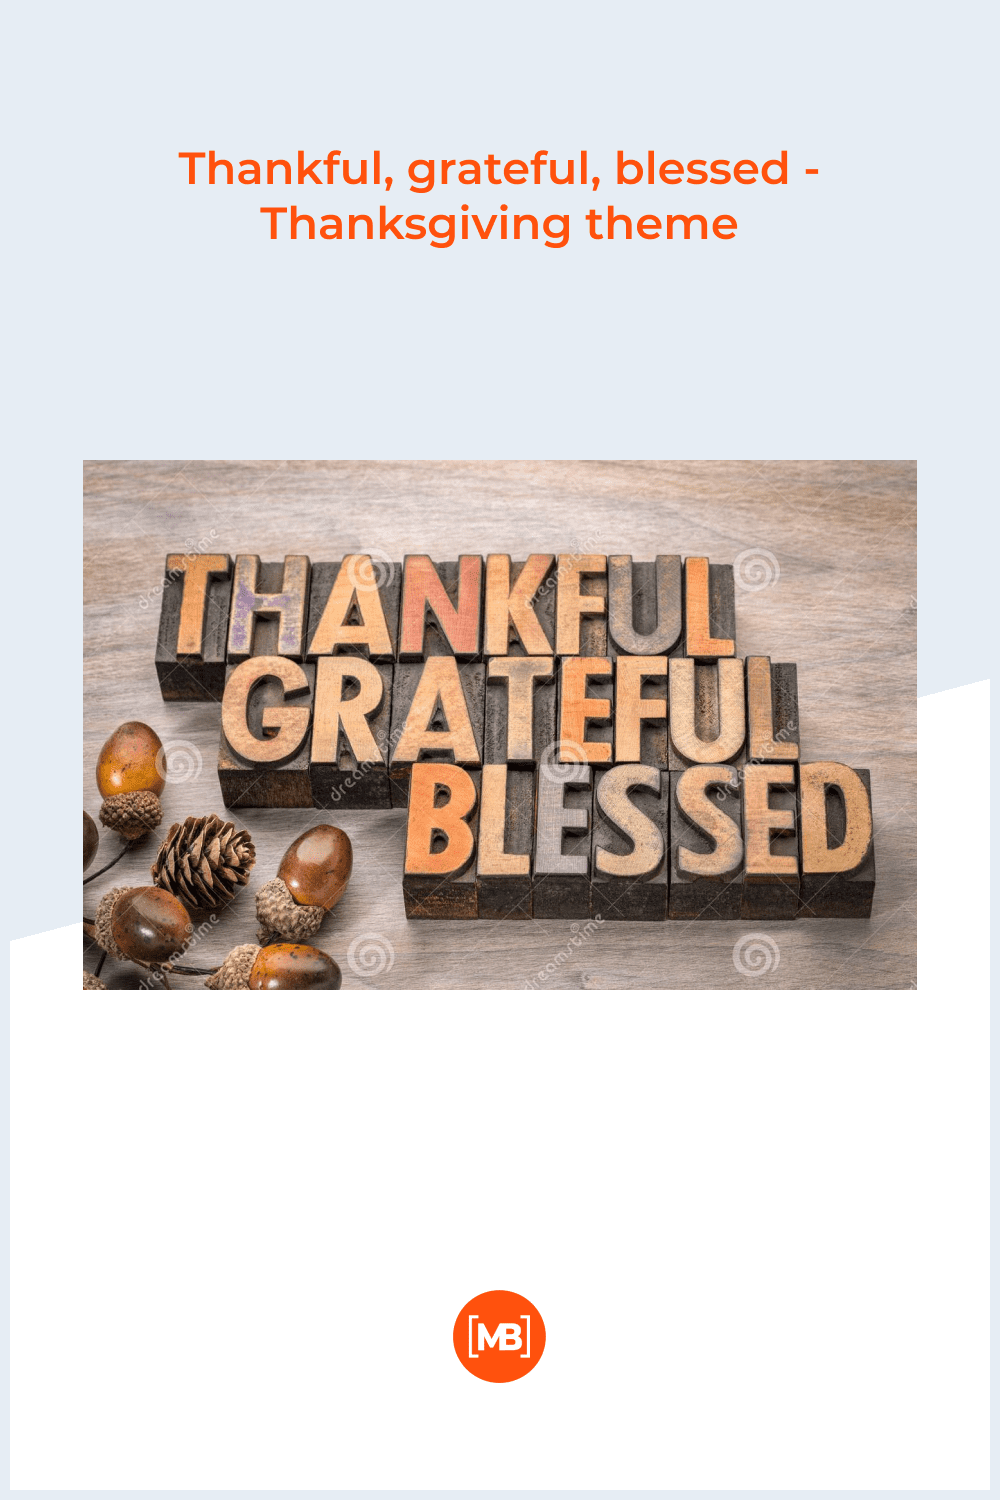 Thankful, grateful, blessed - Thanksgiving theme.